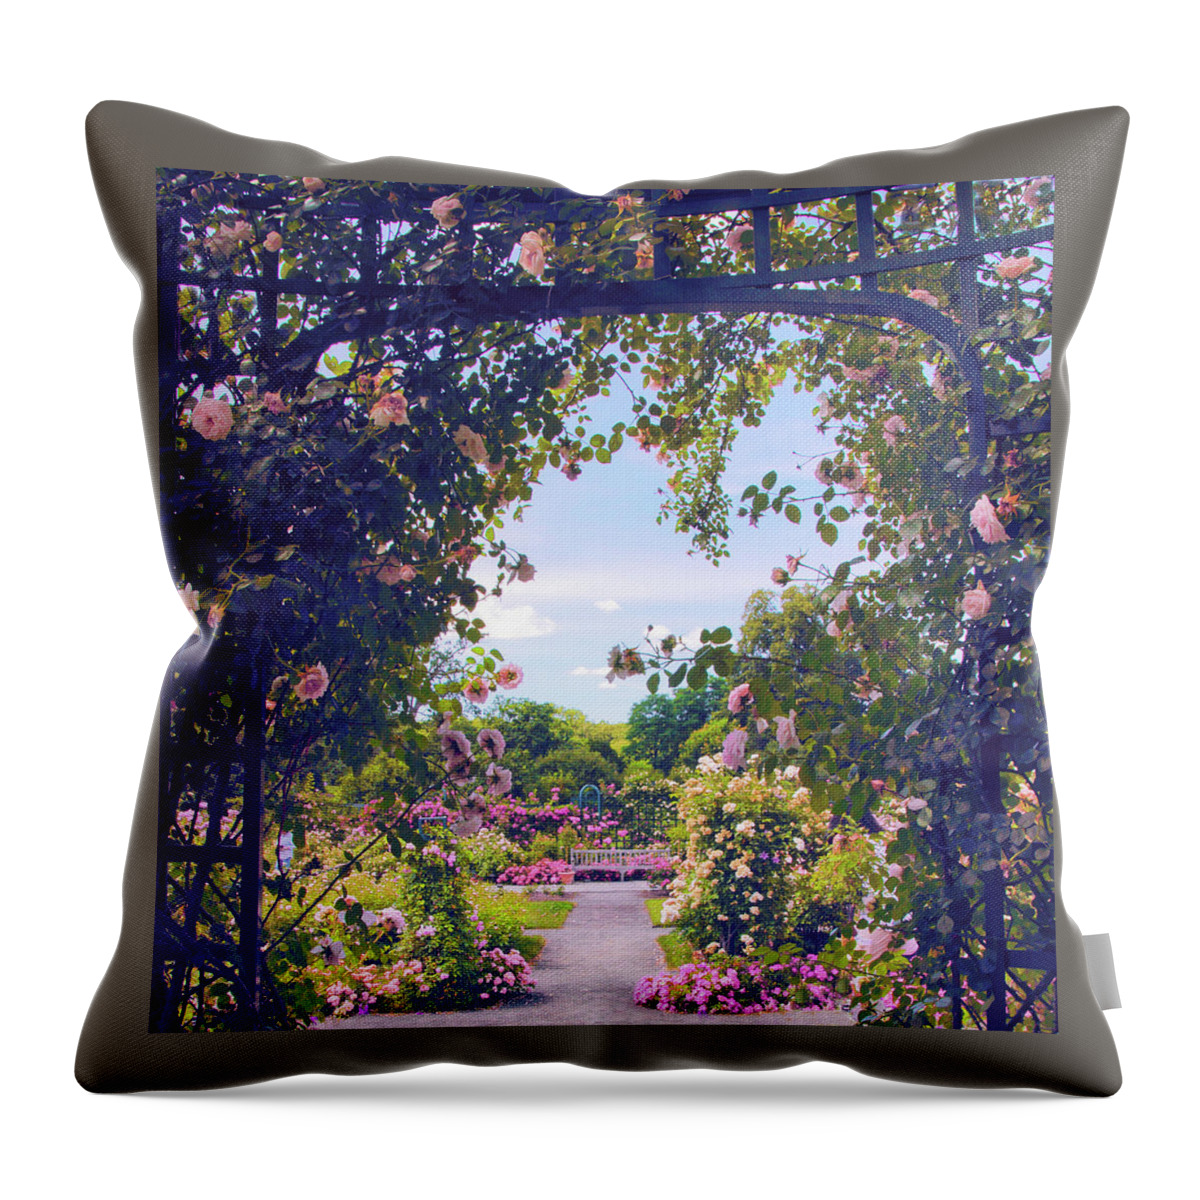 Rose Garden Throw Pillow featuring the photograph Garden Gazebo View by Jessica Jenney